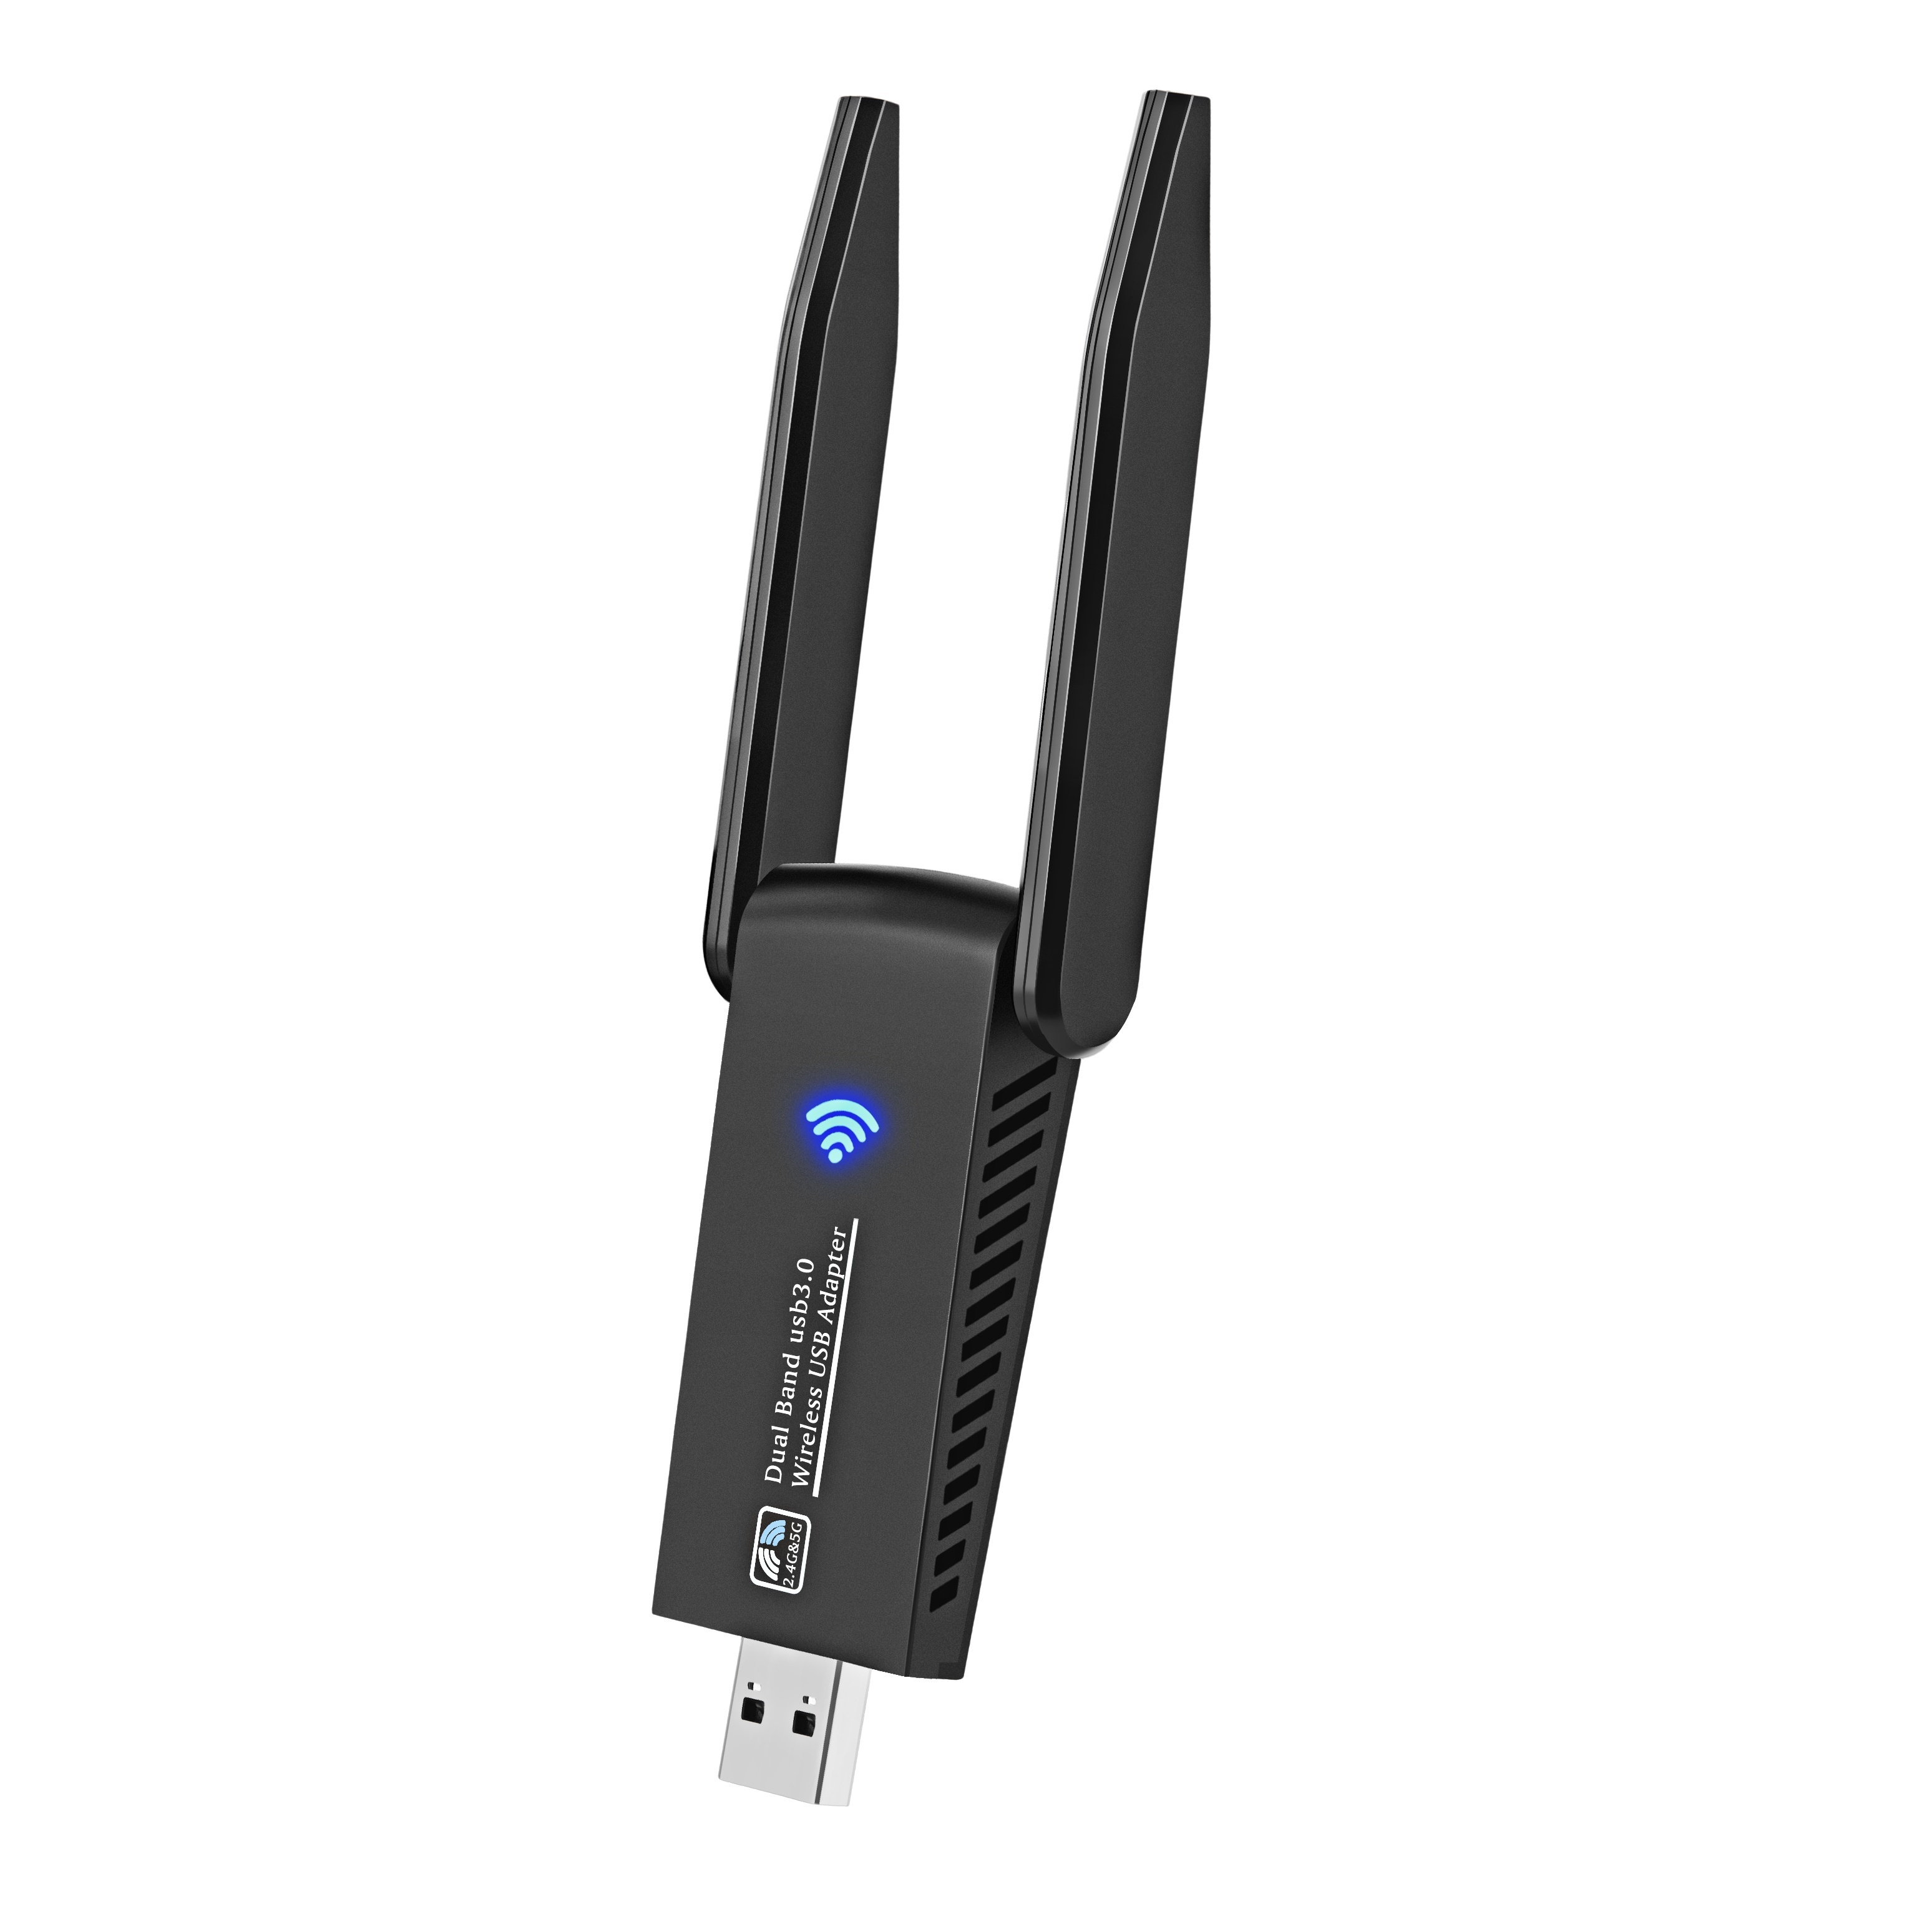 Adaptador inalámbrico USB Wifi para PC - 802.11ac 1200mbps Antenas duales  5dbi 5g / 2.4g Wifi Usb para PC Computadora portátil de escritorio Mac  Windows 10/8 / 8.1 / 7 / vista / xp / mac10.6